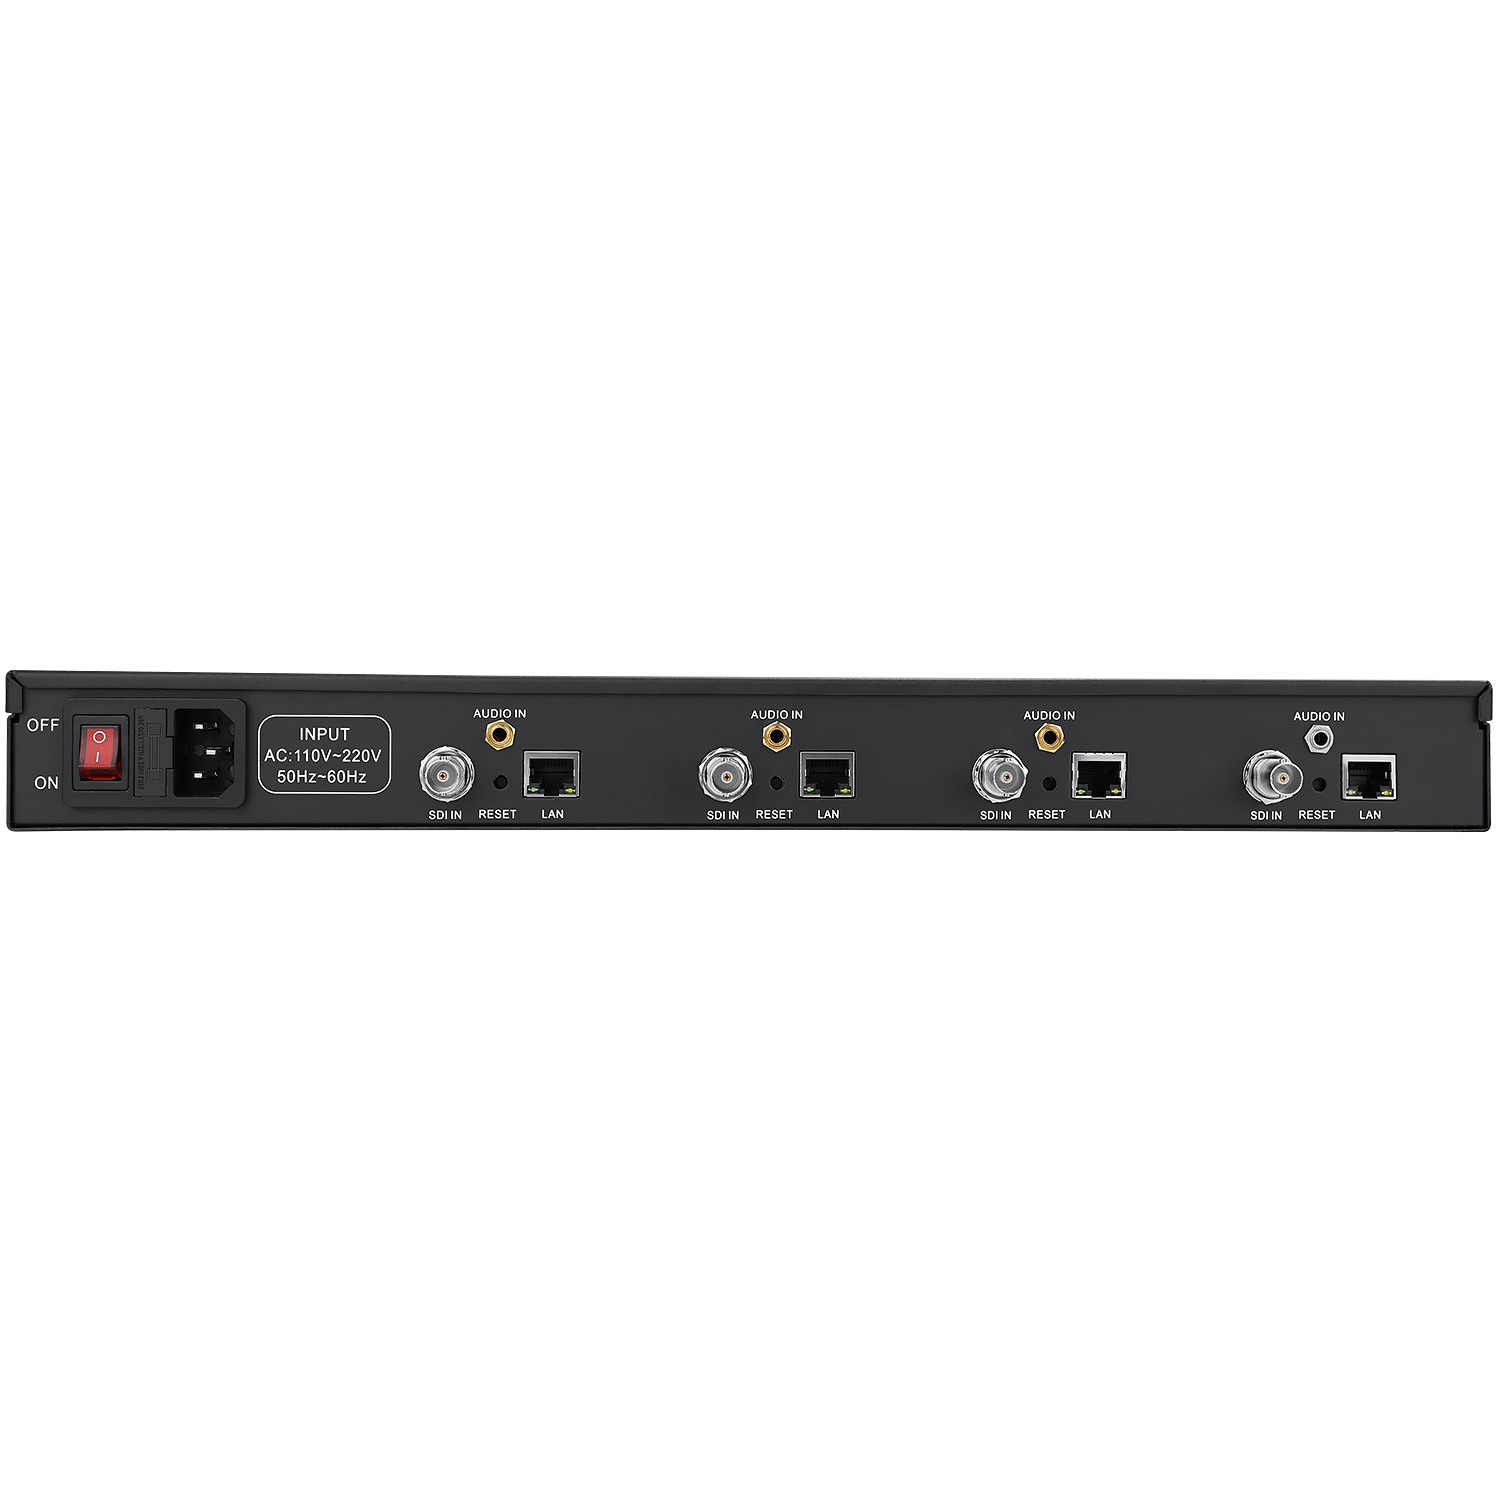 1U Rack 4 Channels H.265 /H.264 SDI Video Encoder - URayTech